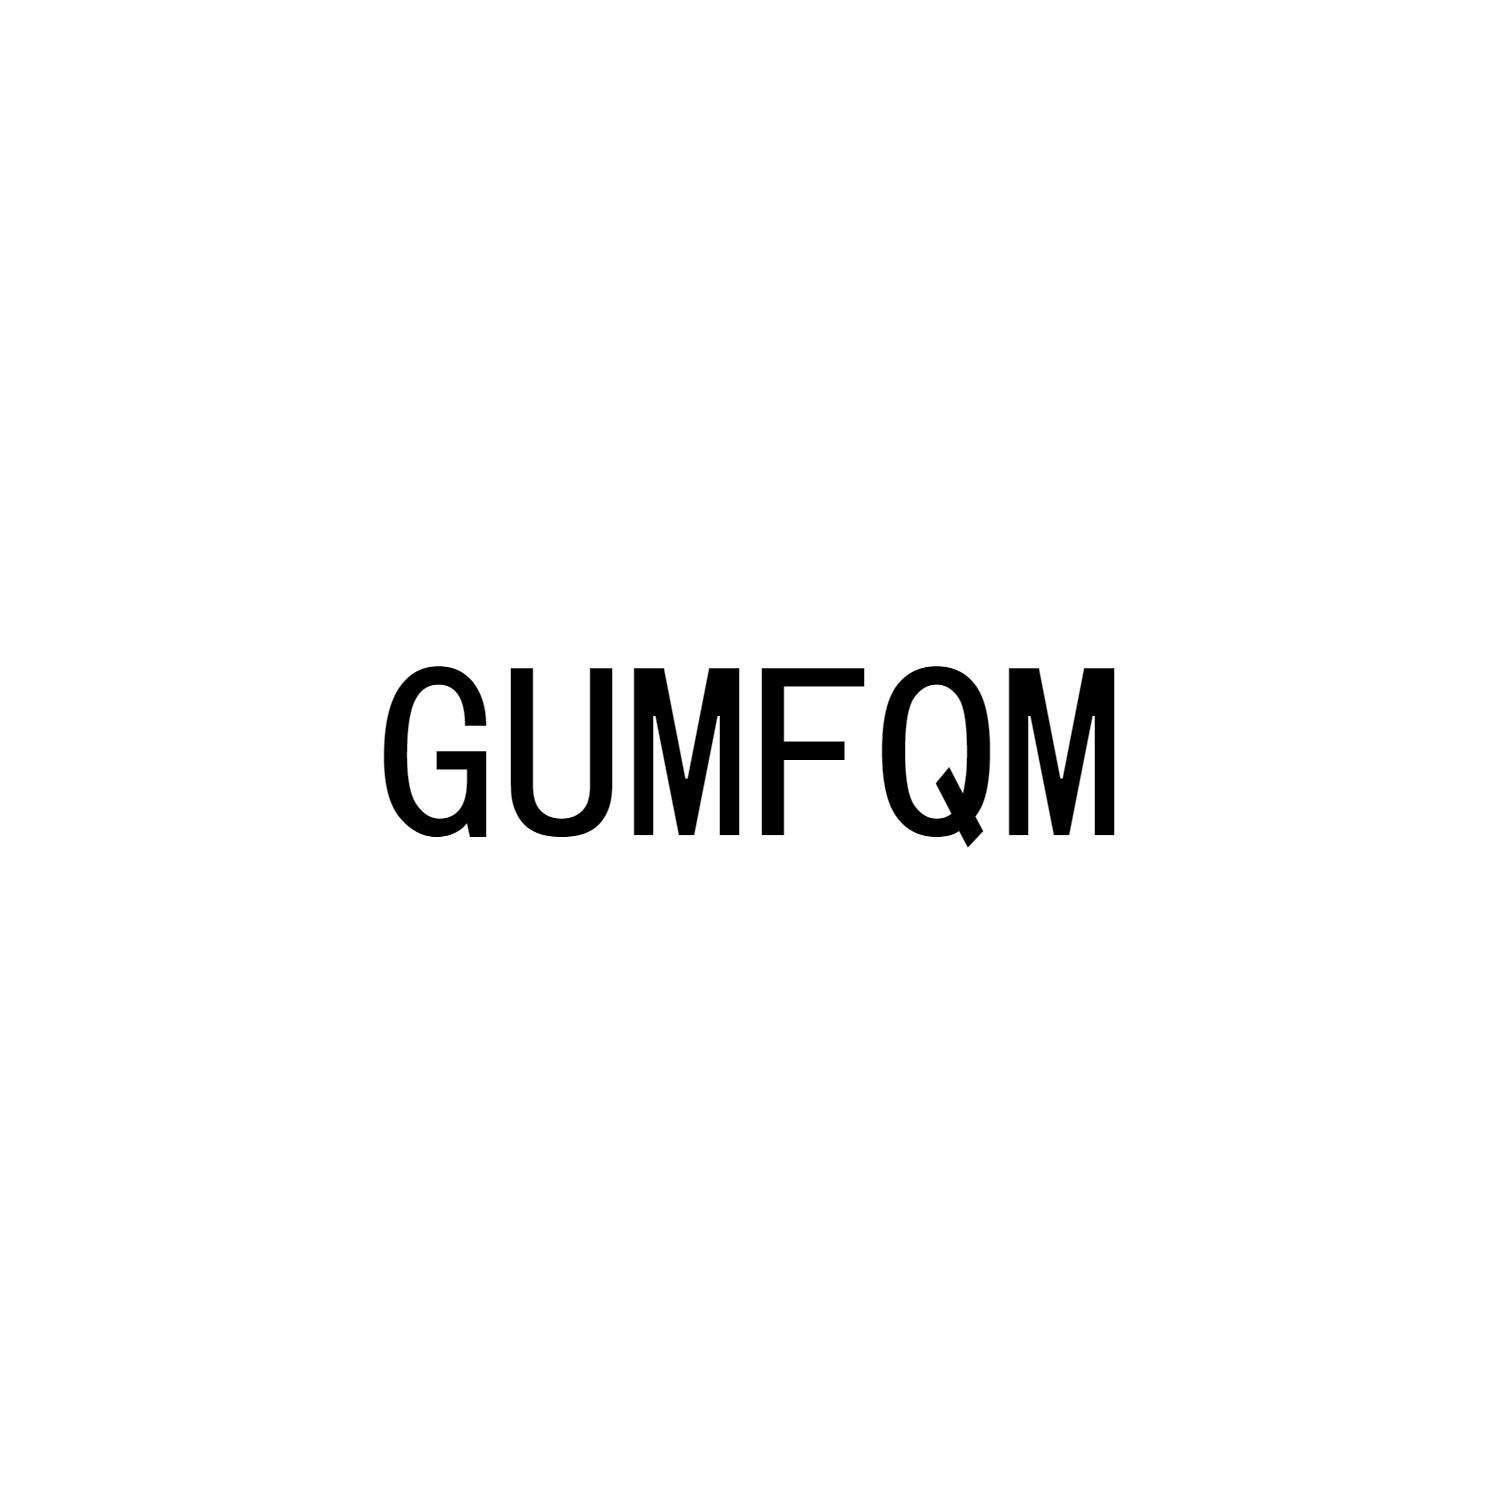 GUMFQM